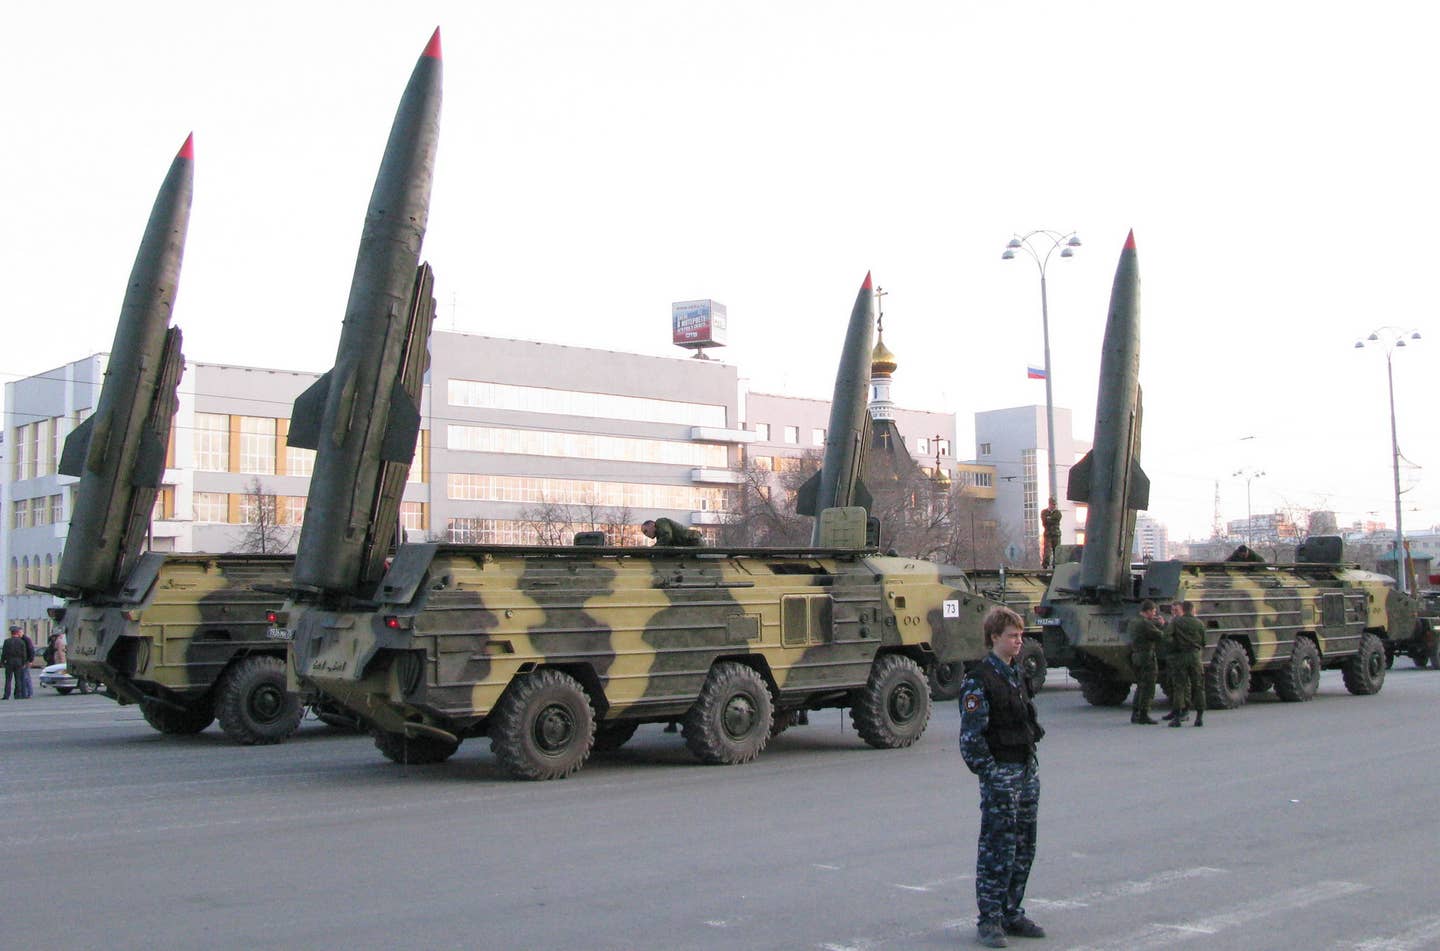 Tochka-U missile systems on parade in Yekaterinburg, Russia. <em>Владислав Фальшивомонетчик/Wikimedia Commons</em>